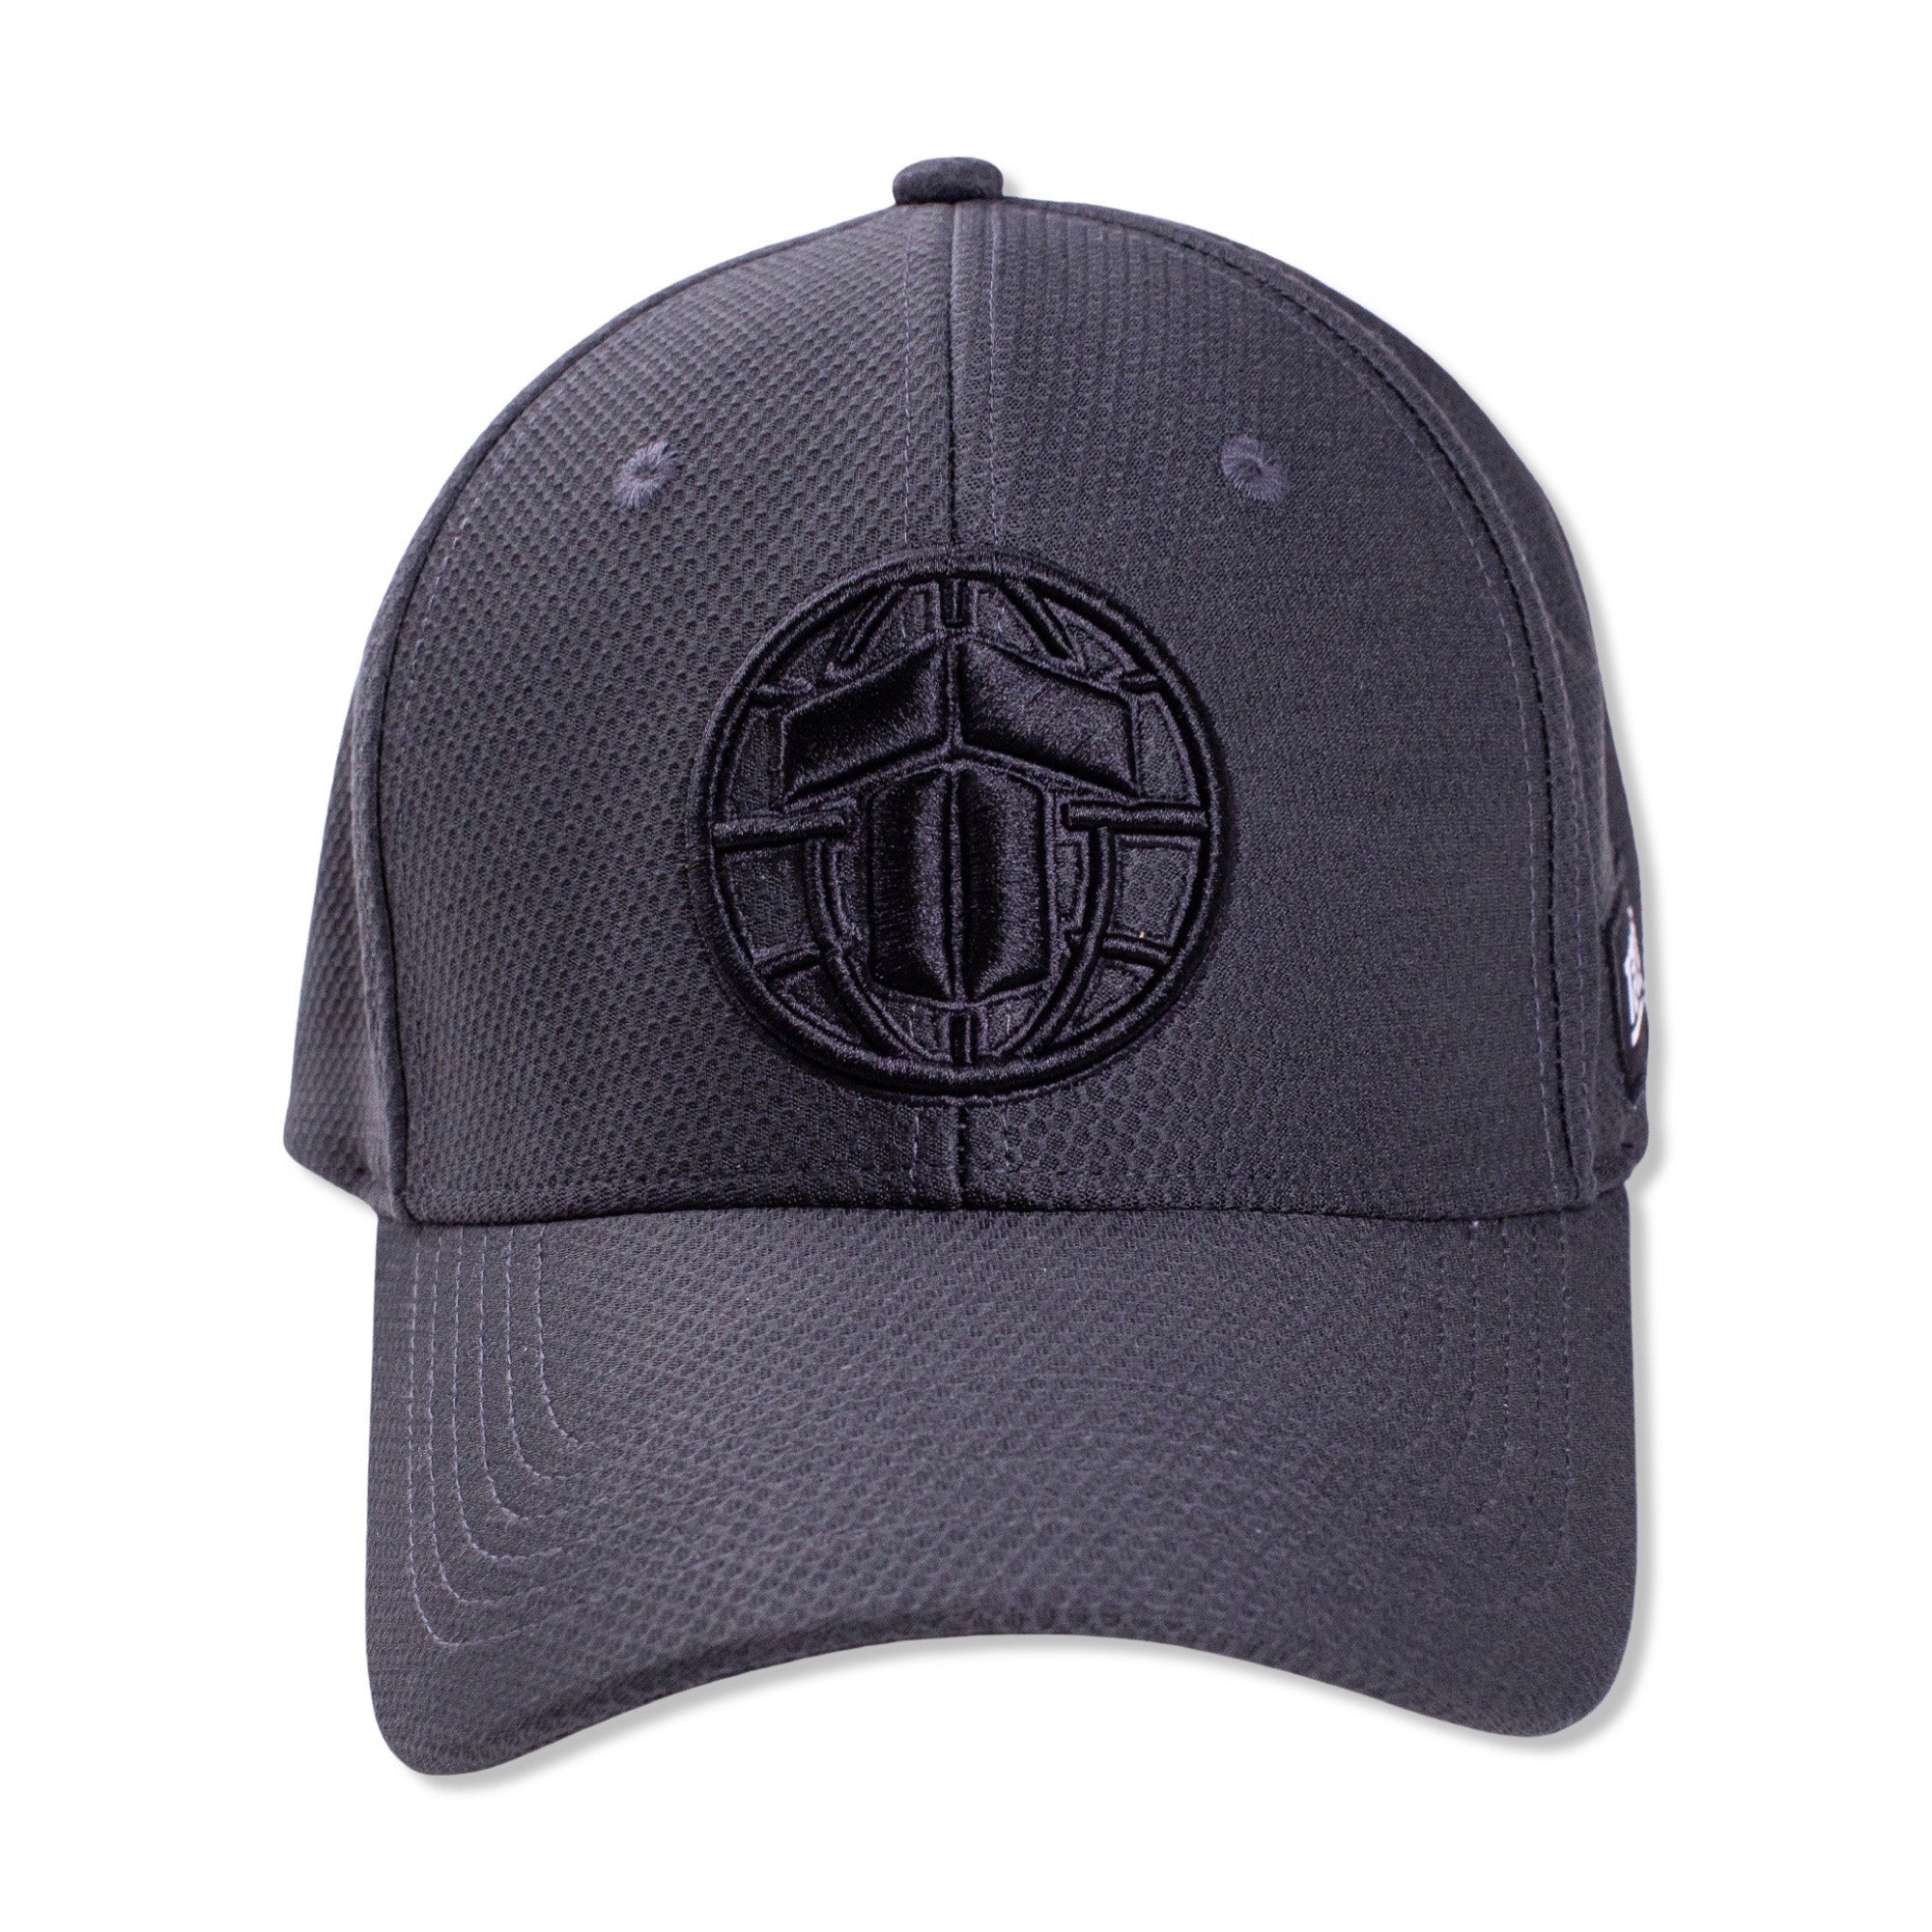 T Logo Baseball Cap - Grey/Black